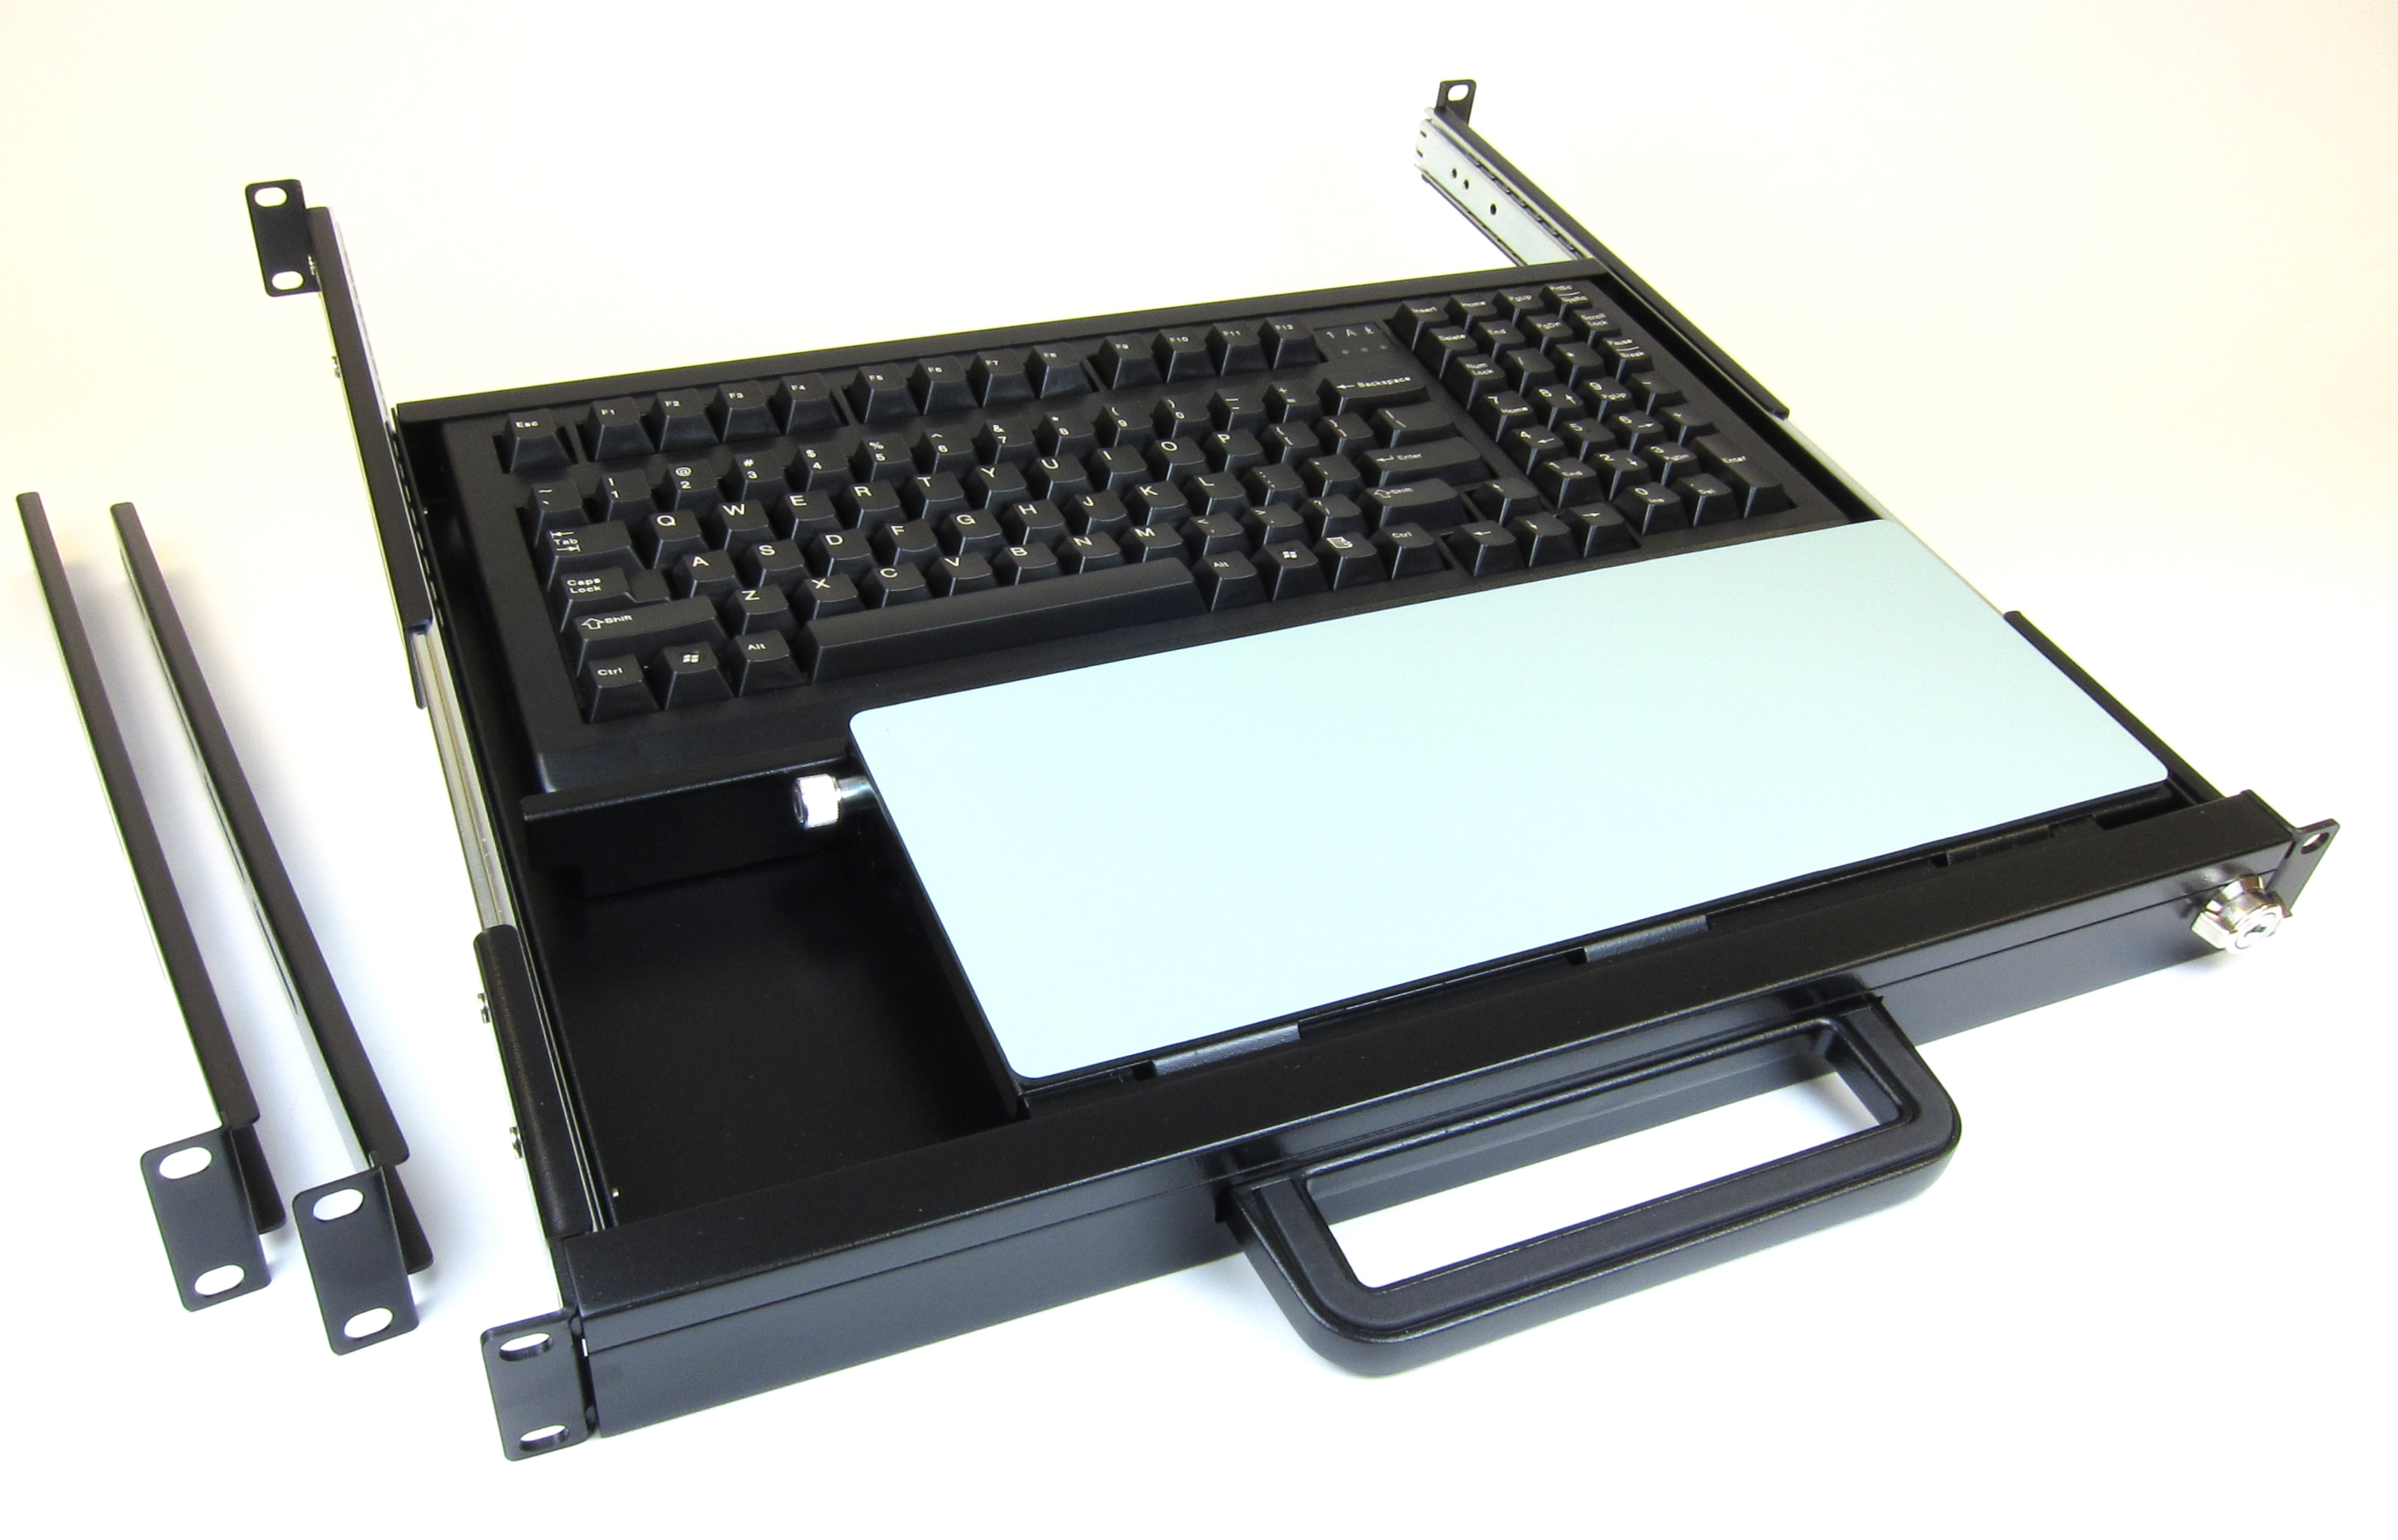 AD-624P-B 1U Rack Mount Keyboard with Mouse Pad